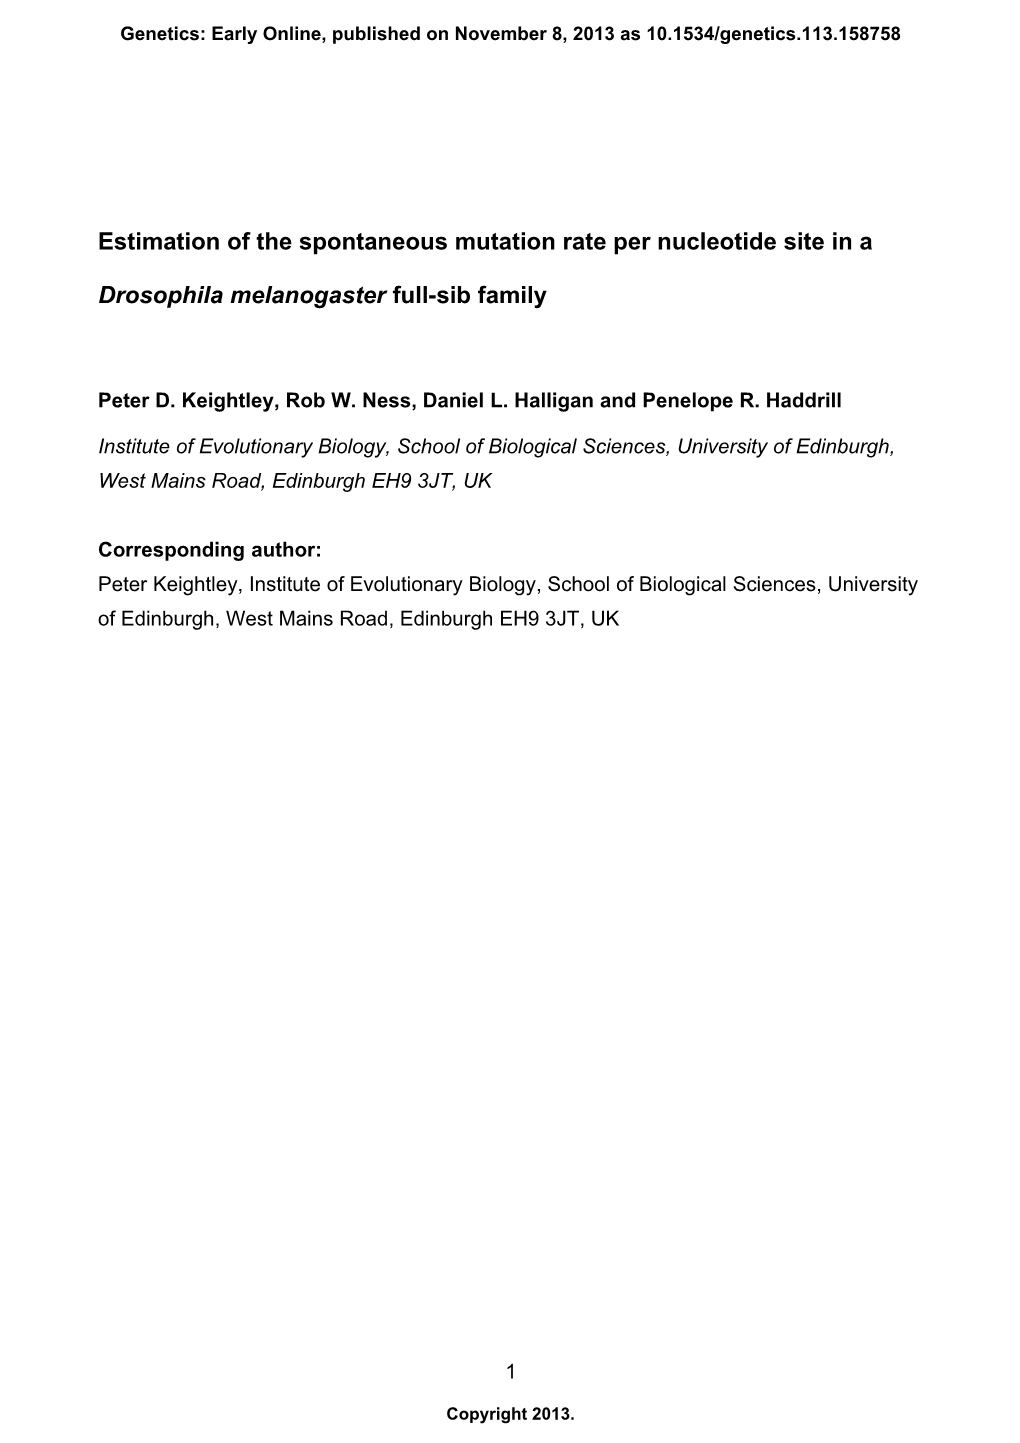 Estimation of the Spontaneous Mutation Rate Per Nucleotide Site in a Drosophila Melanogaster Full-Sib Family